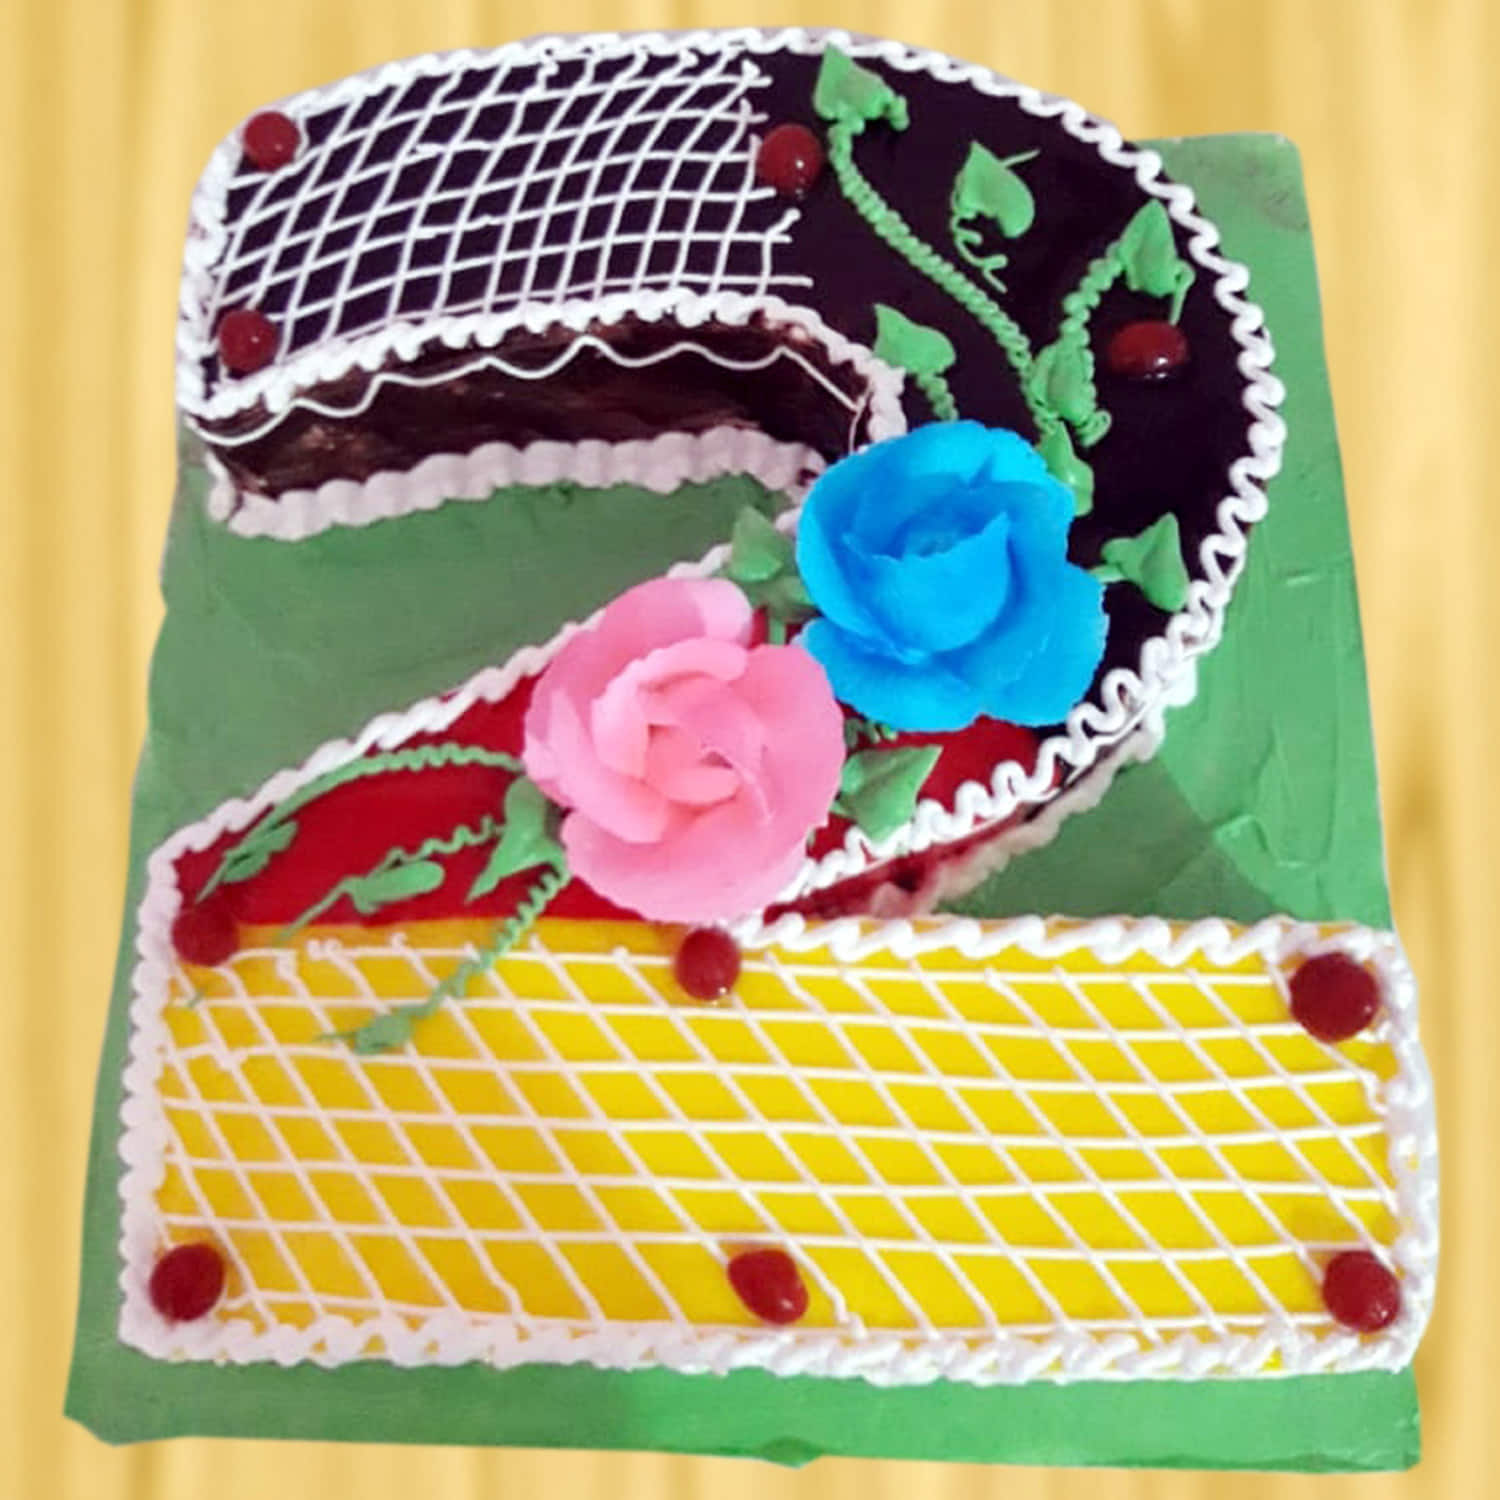 Birthday Cake Childrens Party Garden Theme Stock Photo 1293012646 |  Shutterstock